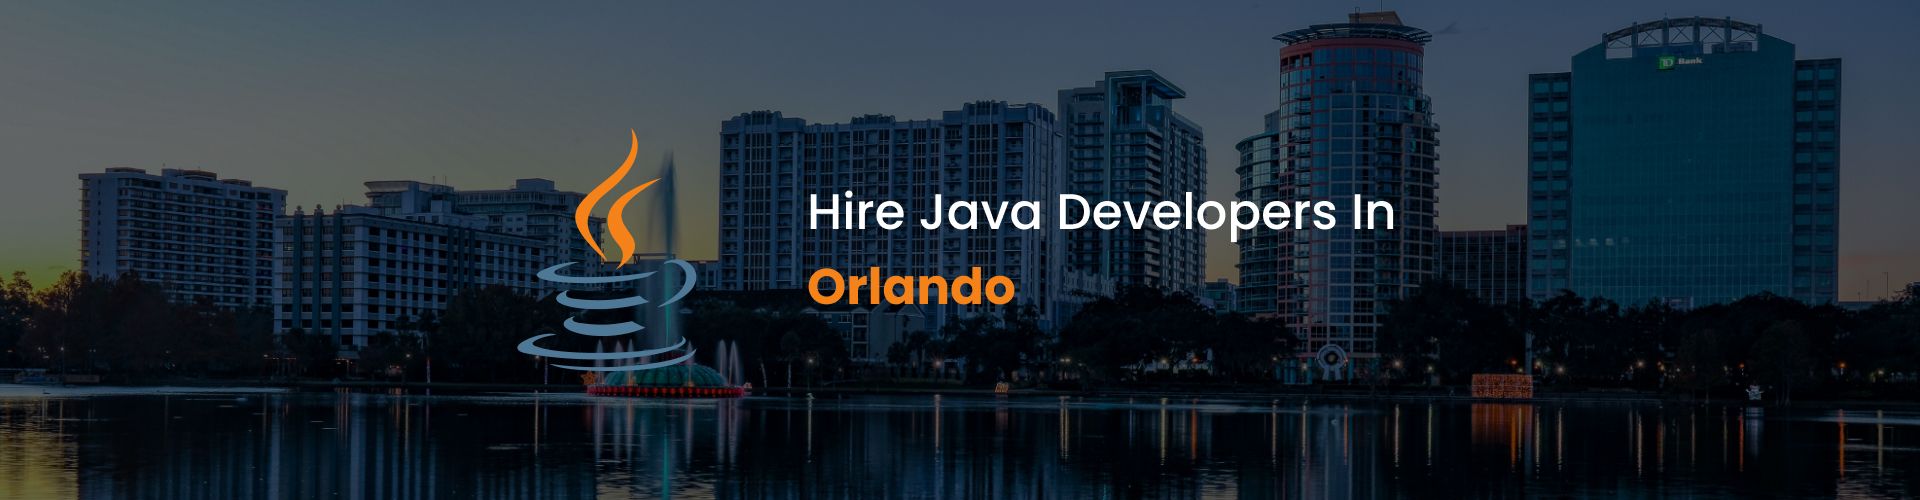 hire java developers in orlando